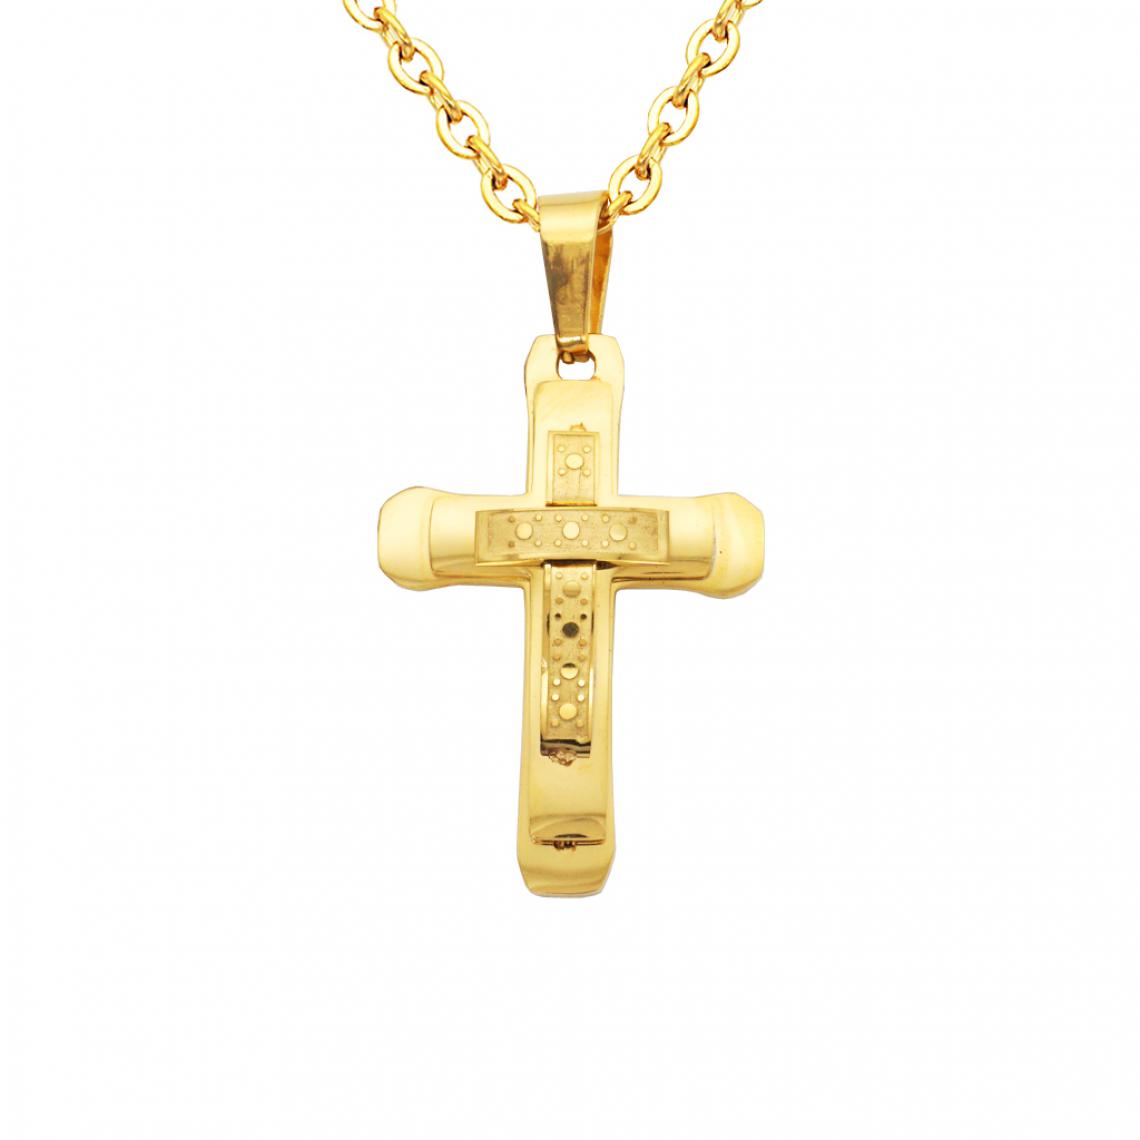 marque generique - Femmes Hommes En Acier Inoxydable Croix Crucifix Chaîne Collier Pendentif Bijoux En Or - Perles